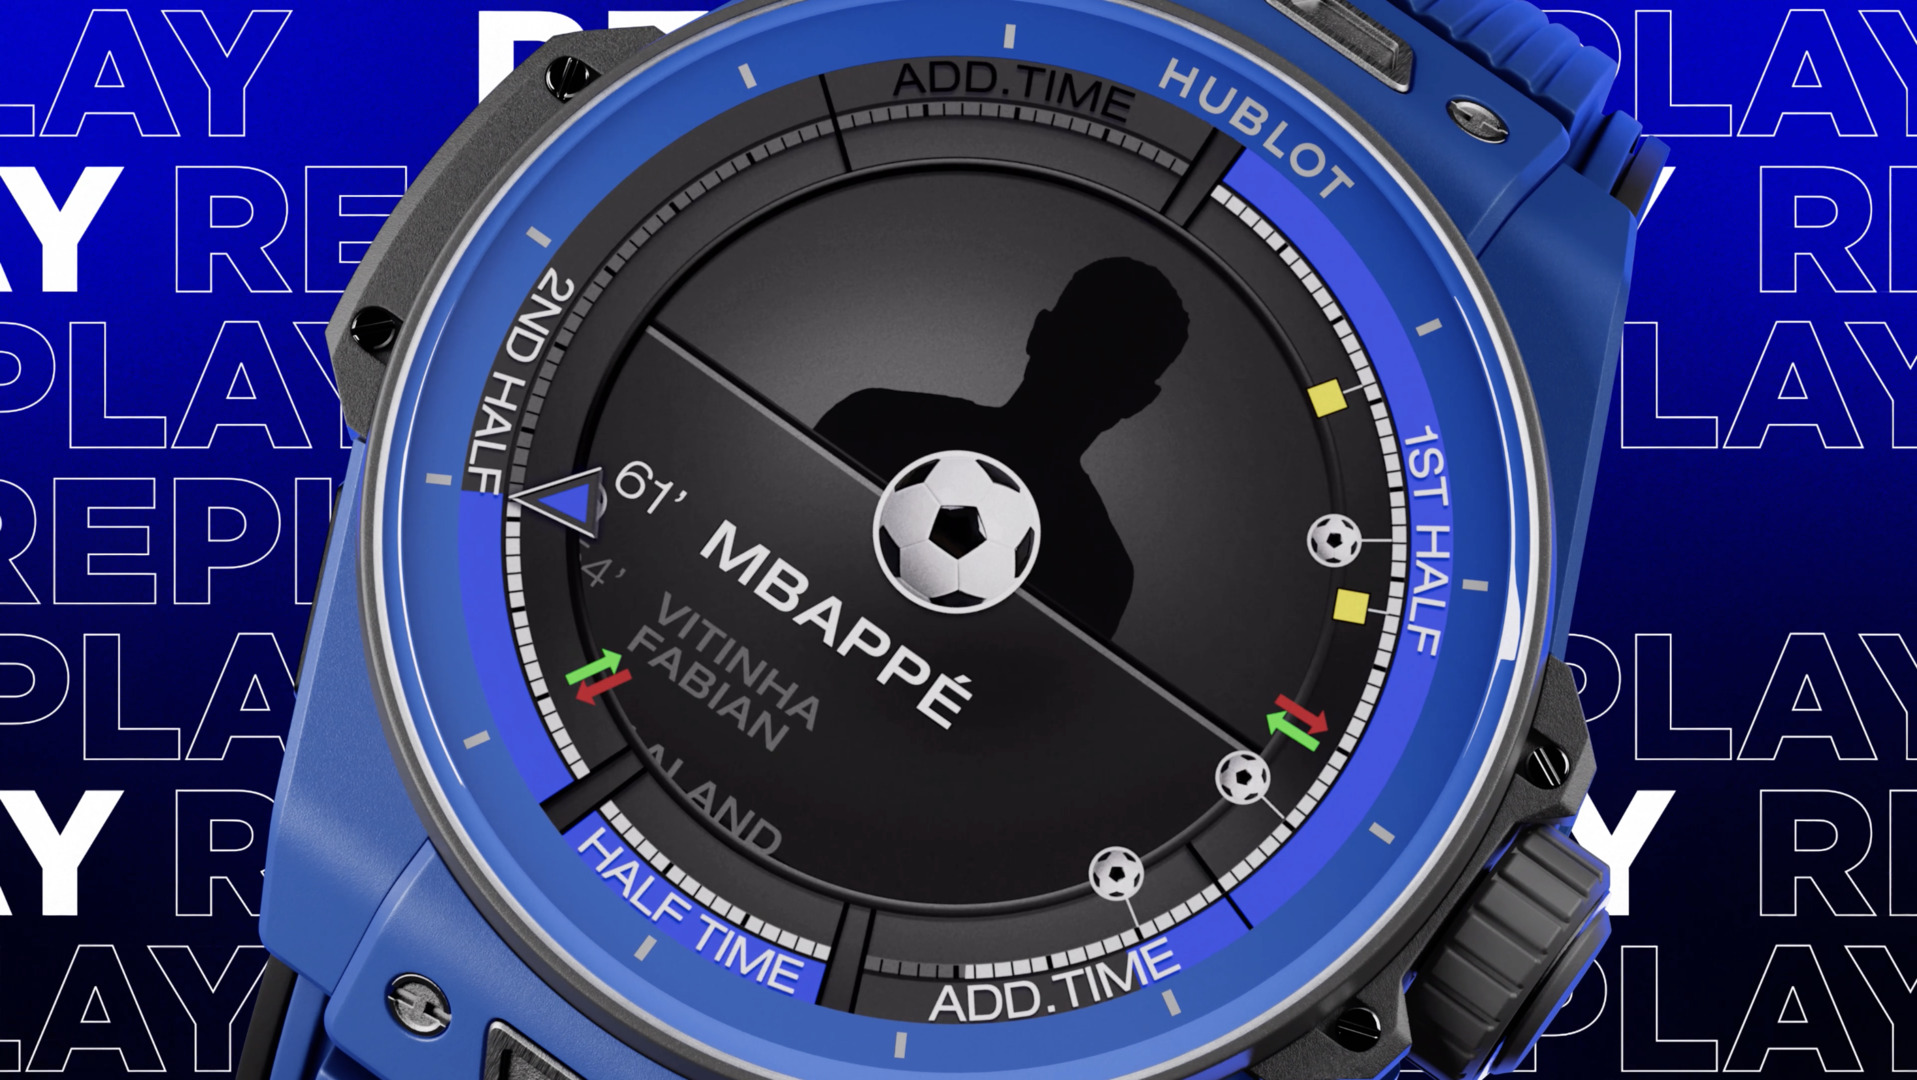 Hublot Big Bang e UEFA Champions League™ Watch - 42 mm - Digital